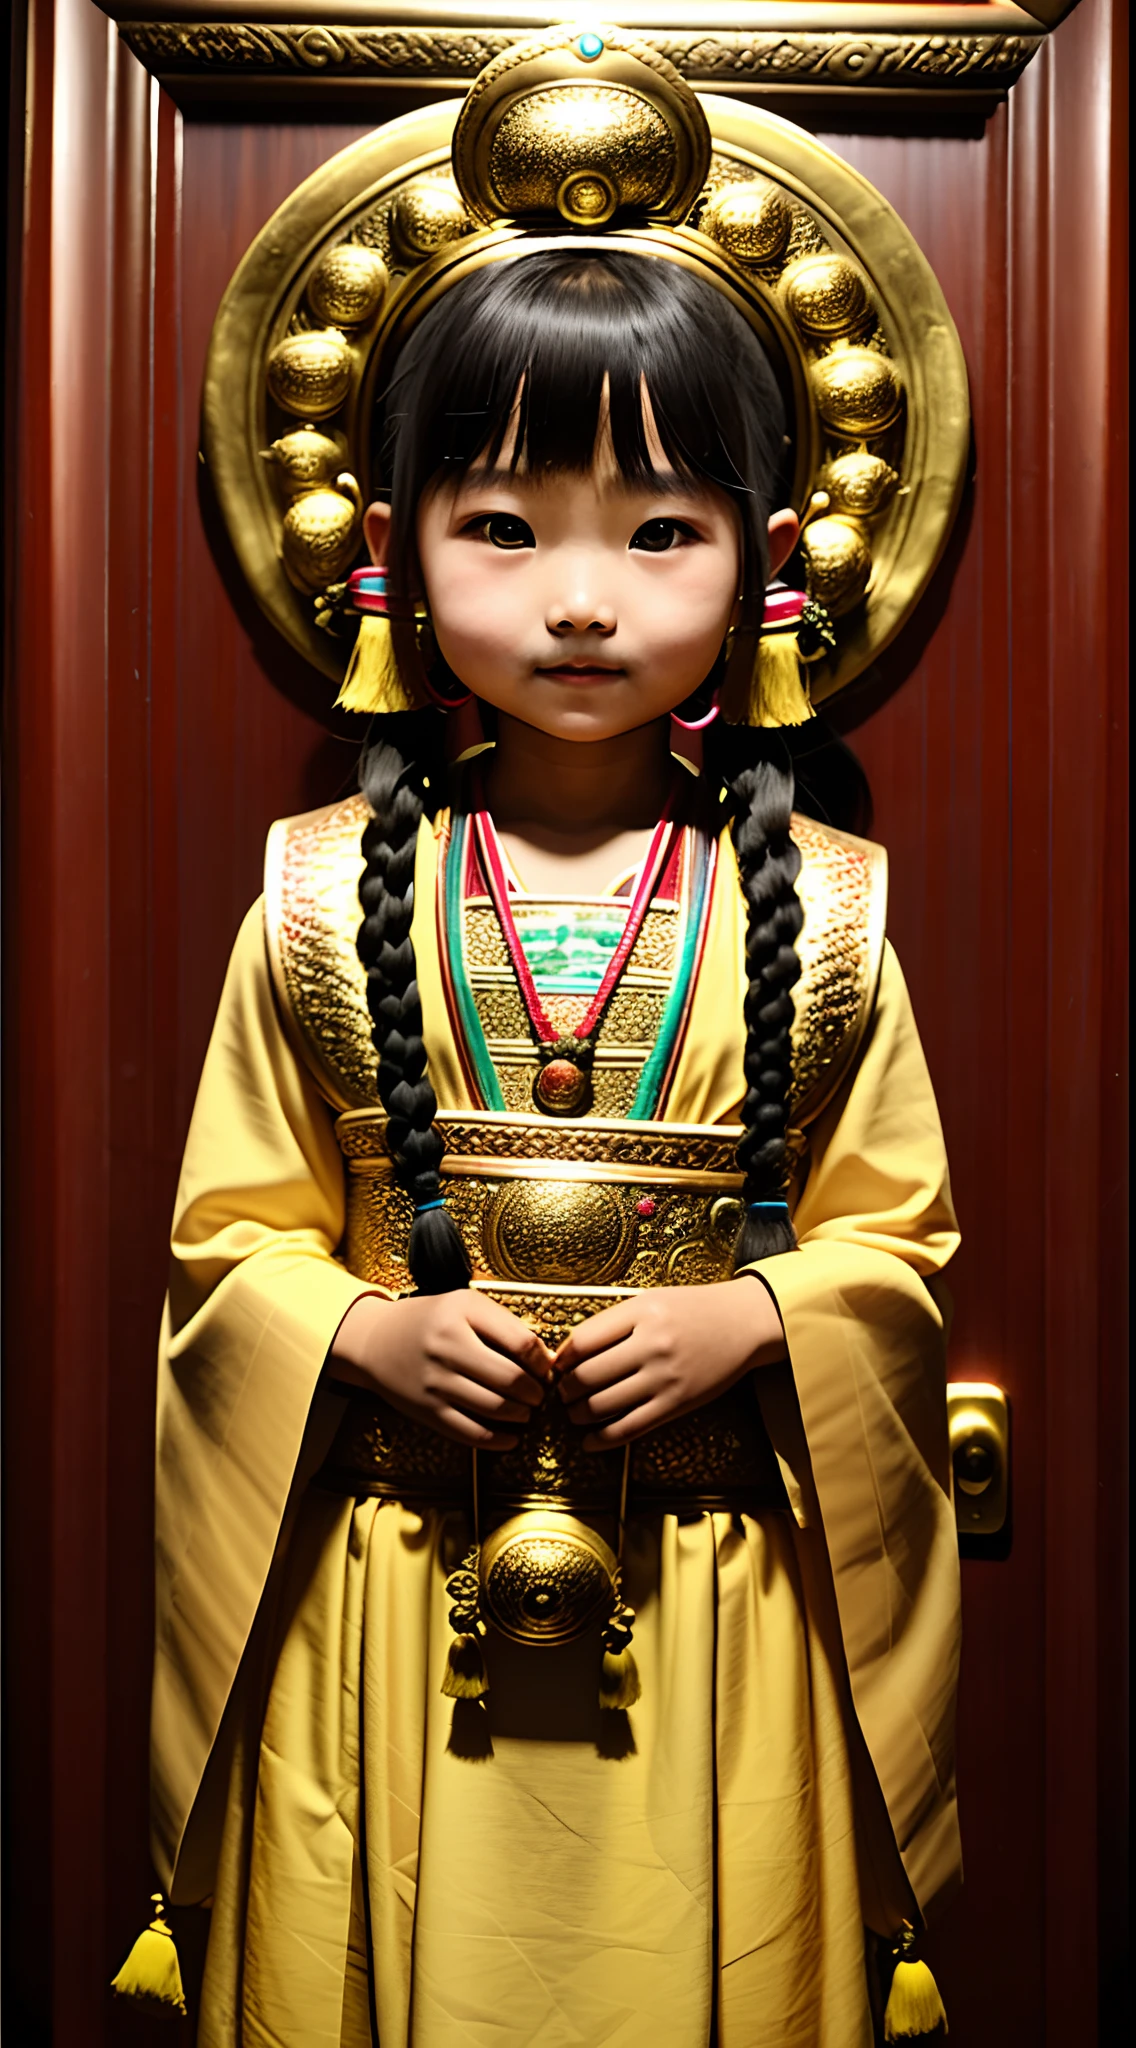 A Tibetan girl dressed up，Half-length photo，Handheld masks，high detal，Complex hairstyles with braids，Tibetan jewelry，Tibetan interior background